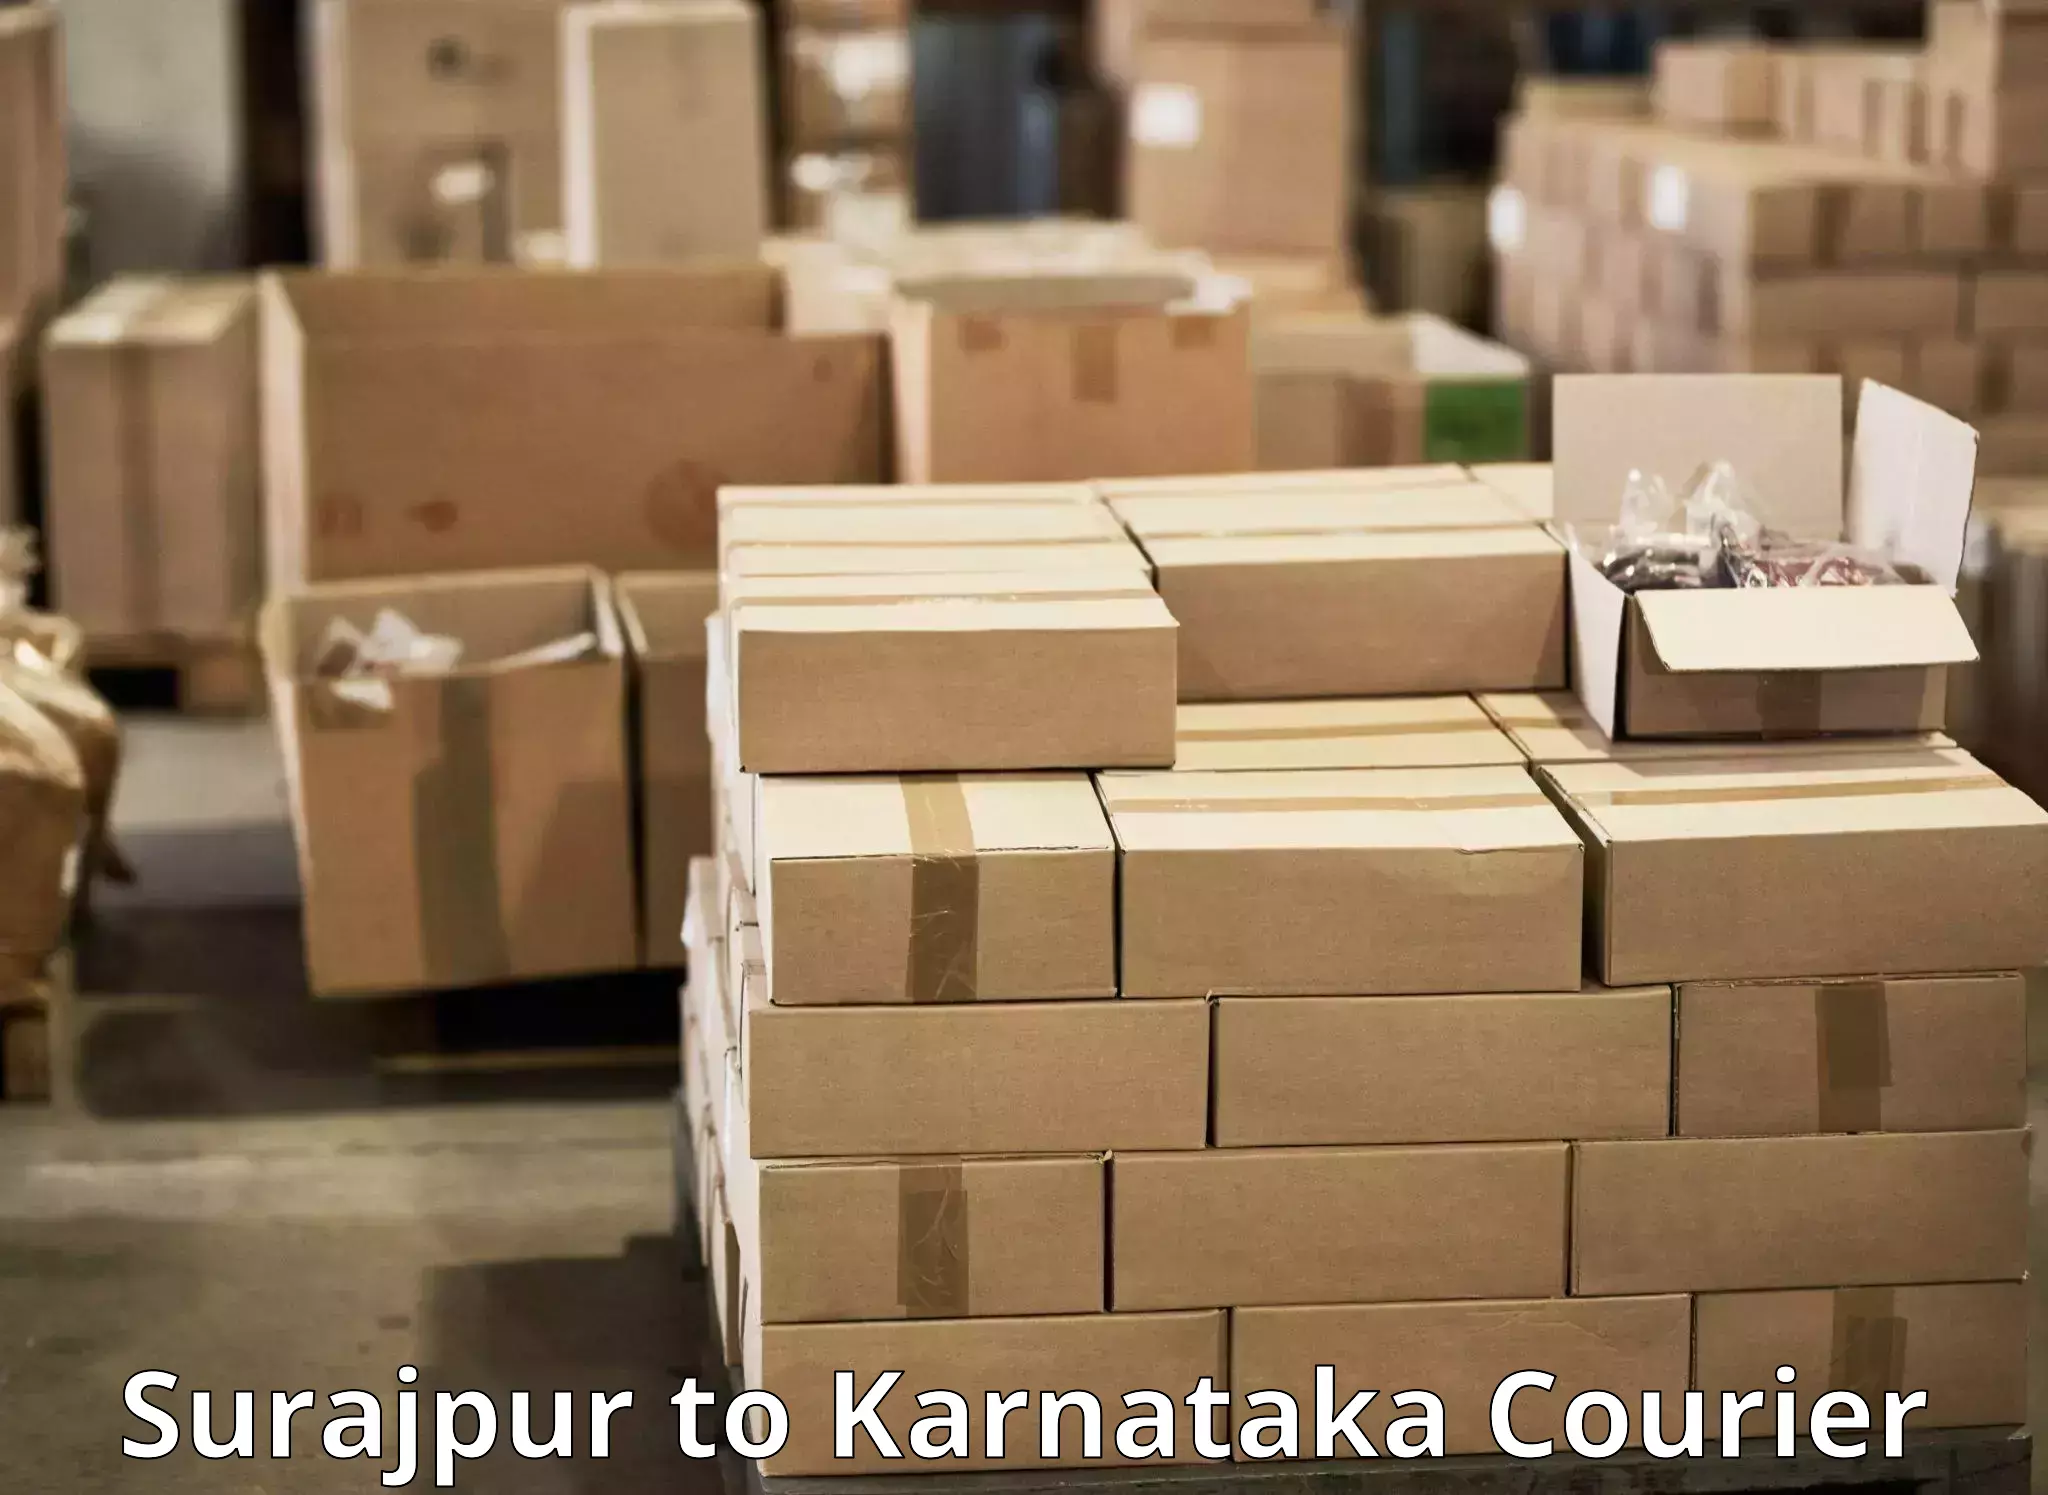 Courier service comparison Surajpur to Afzalpur